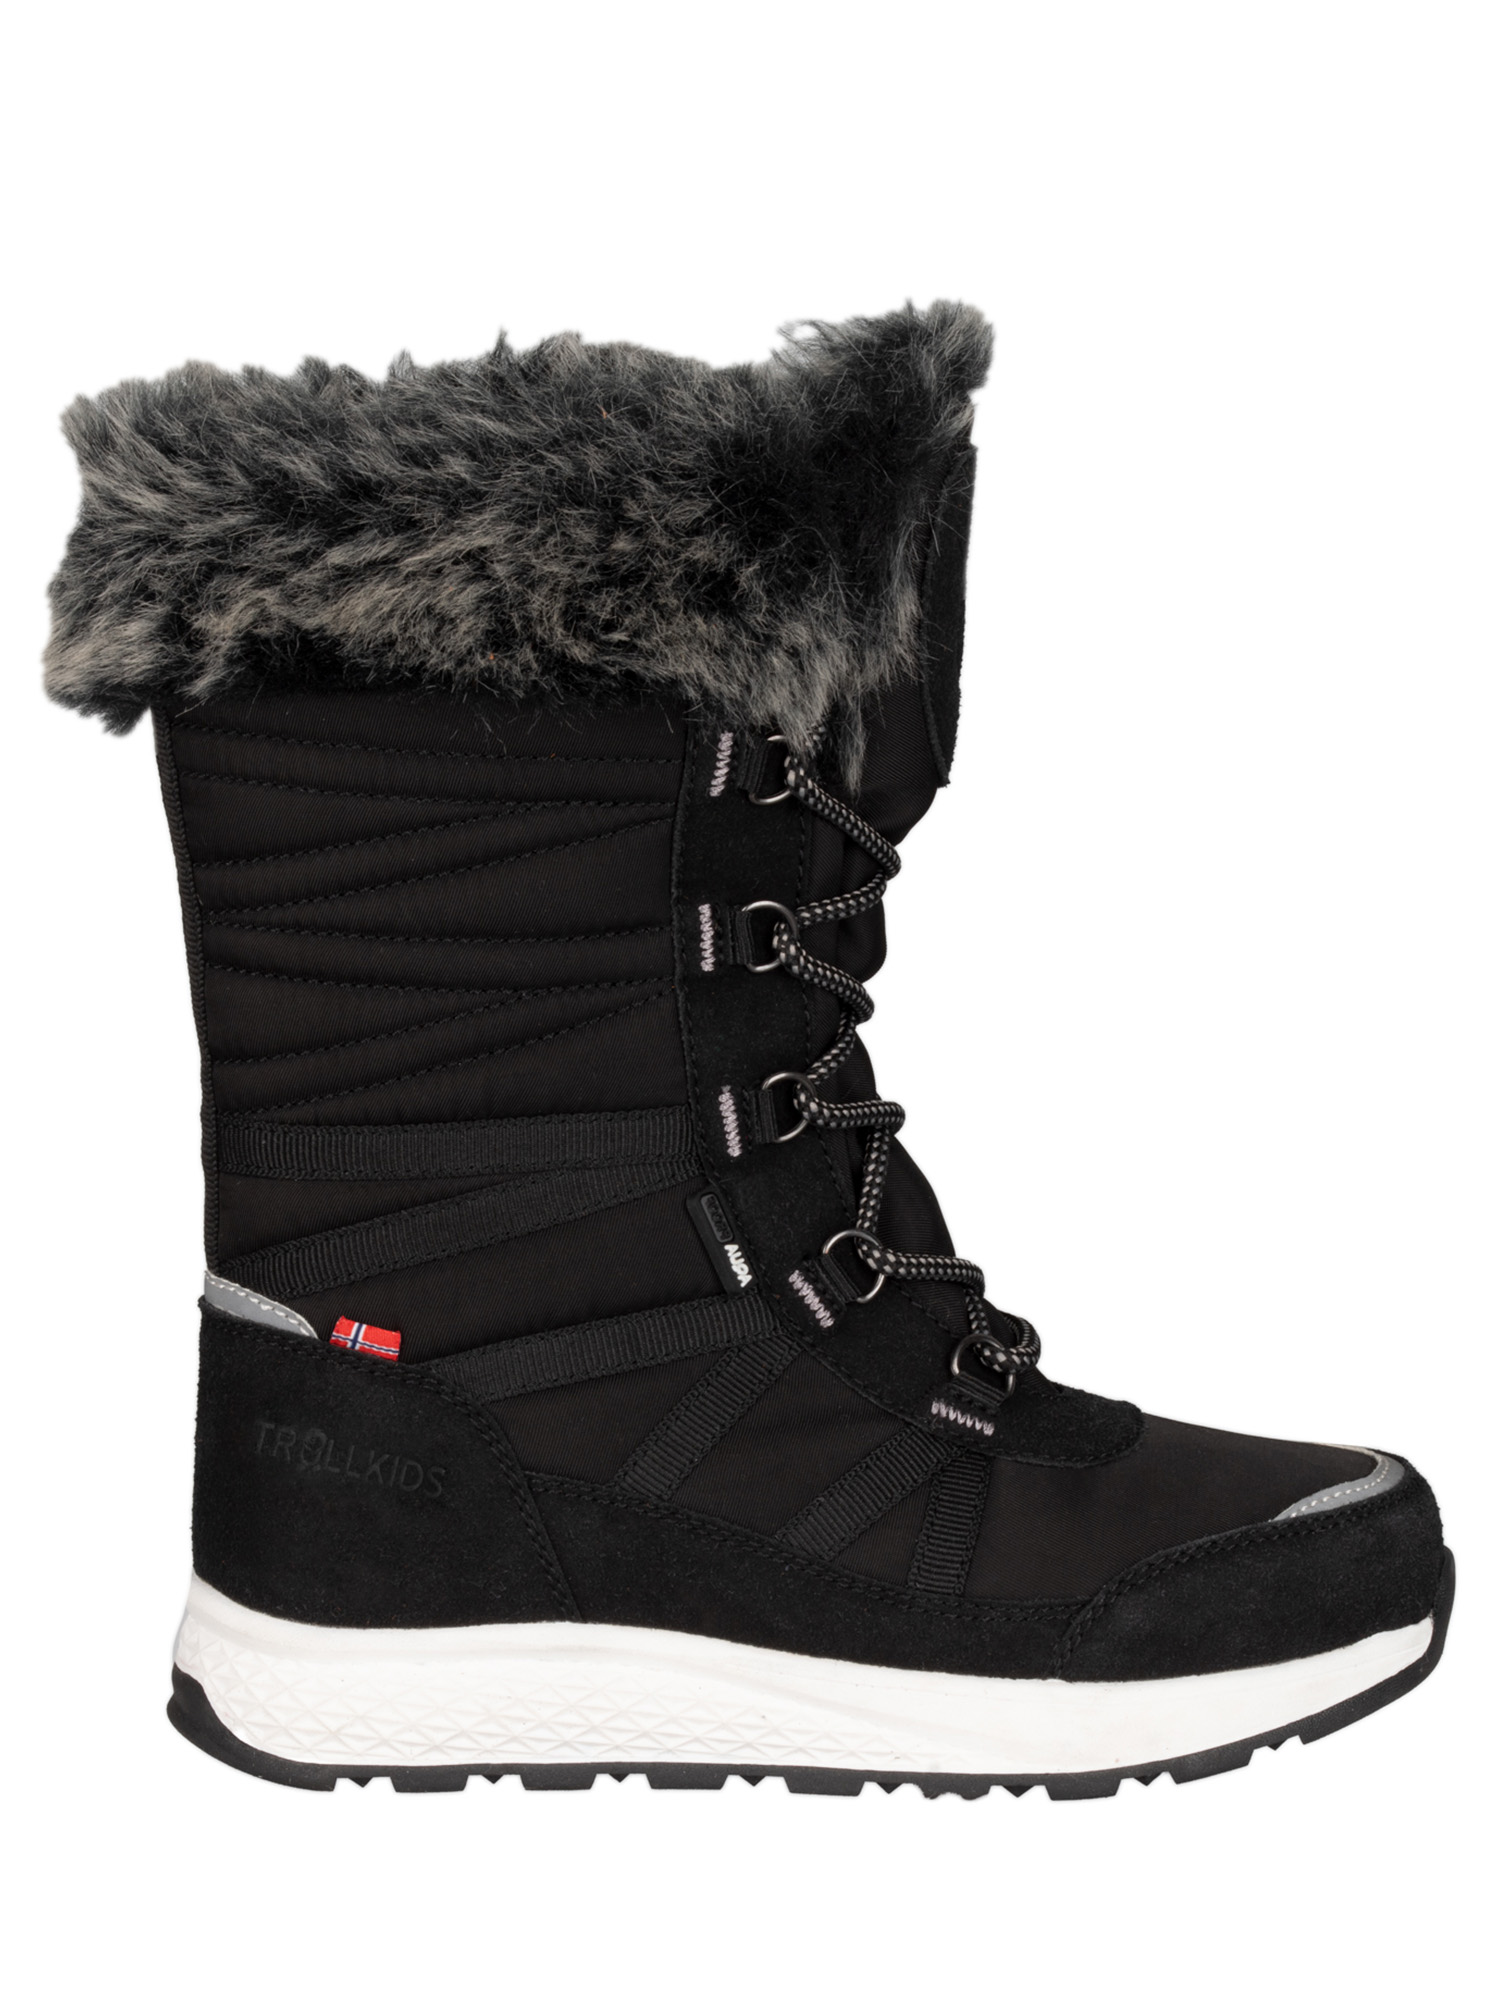 Ботинки Trollkids Girls Hemsedal Winter Boots Xt, черный, 32